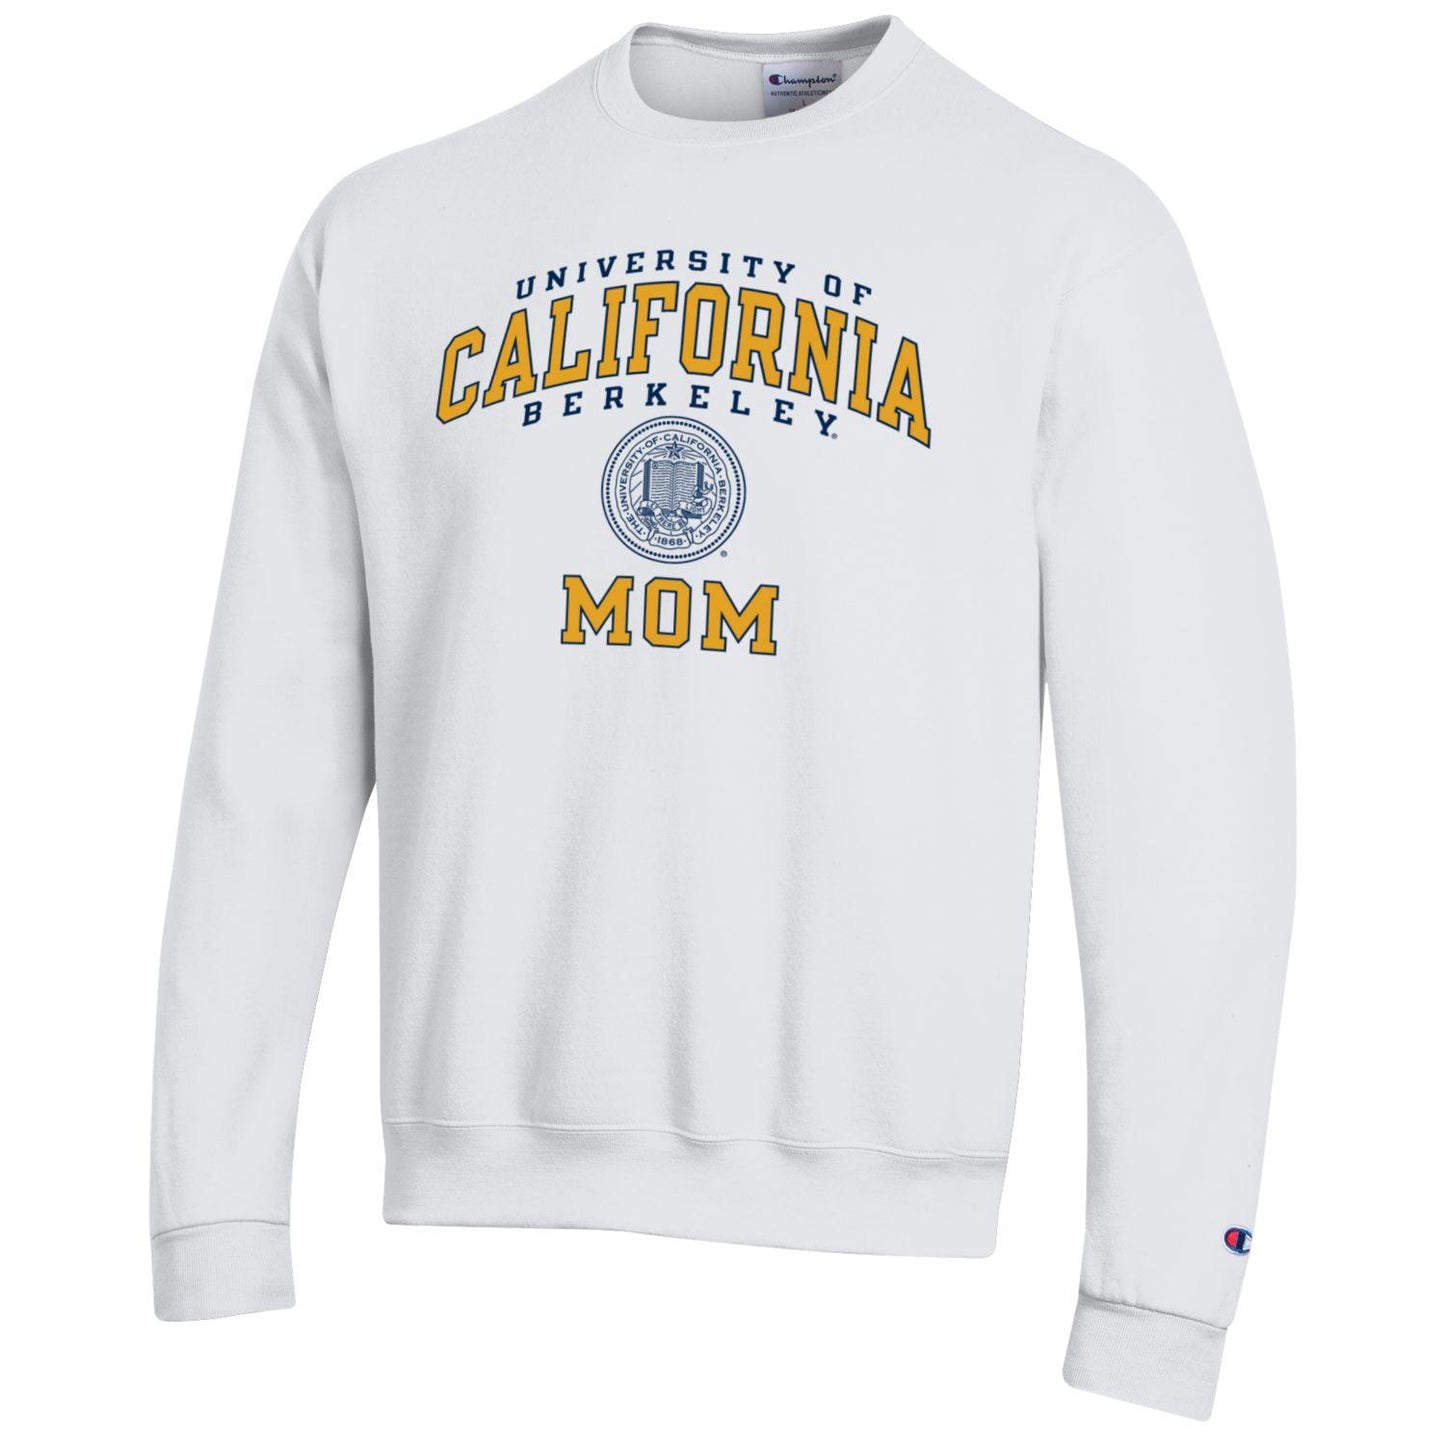 U.C. Berkeley Cal mom Champion crew neck sweatshirt-White-Shop College Wear